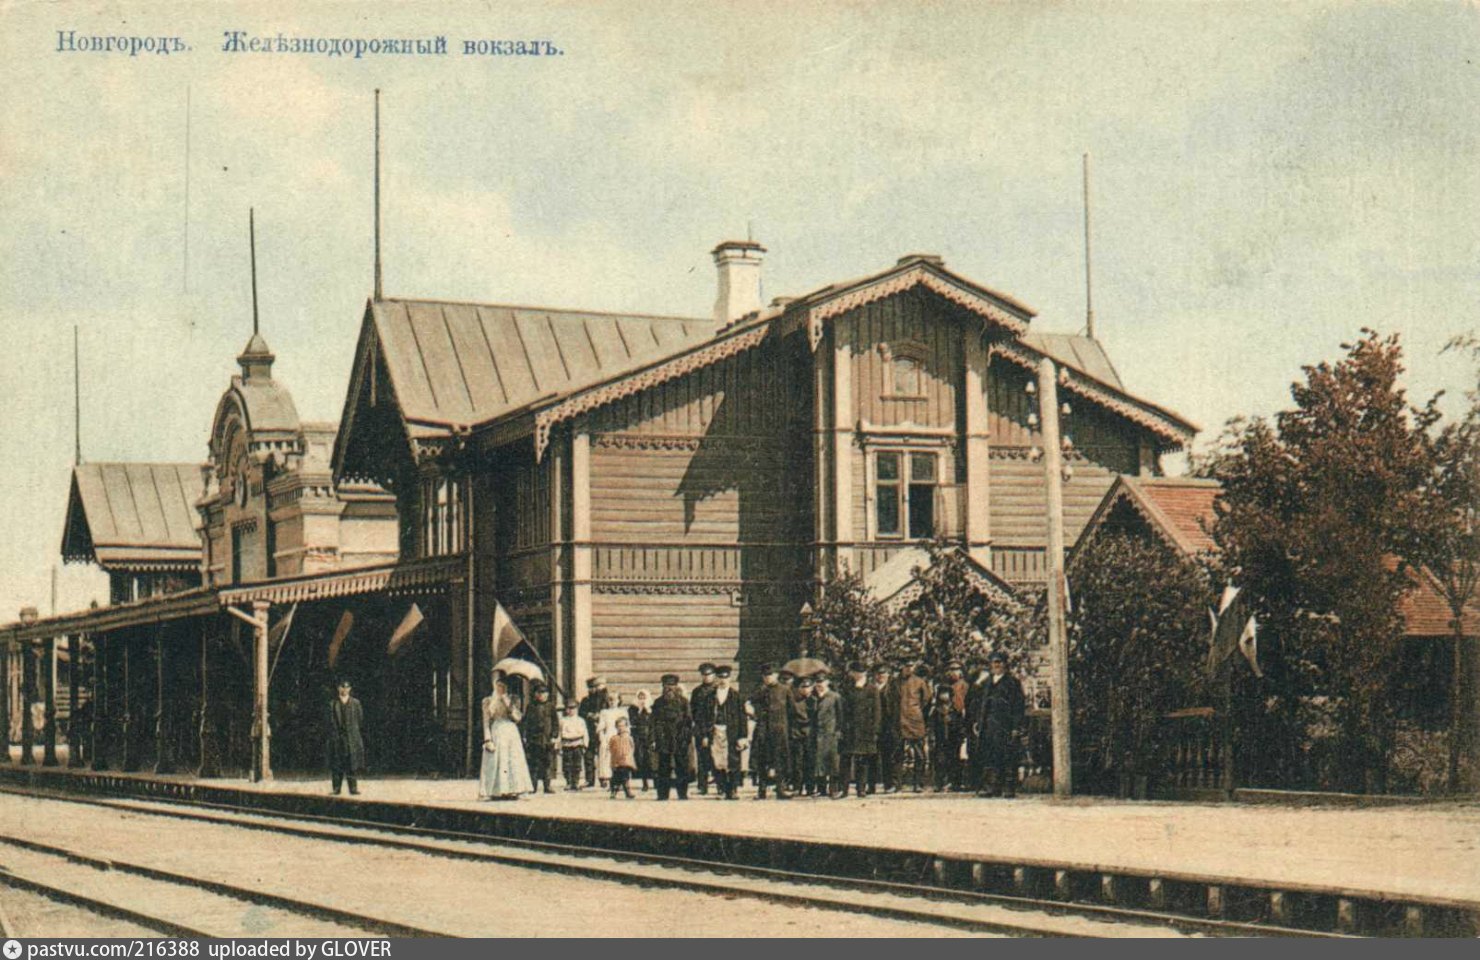 Фото нижнего новгорода 19 века